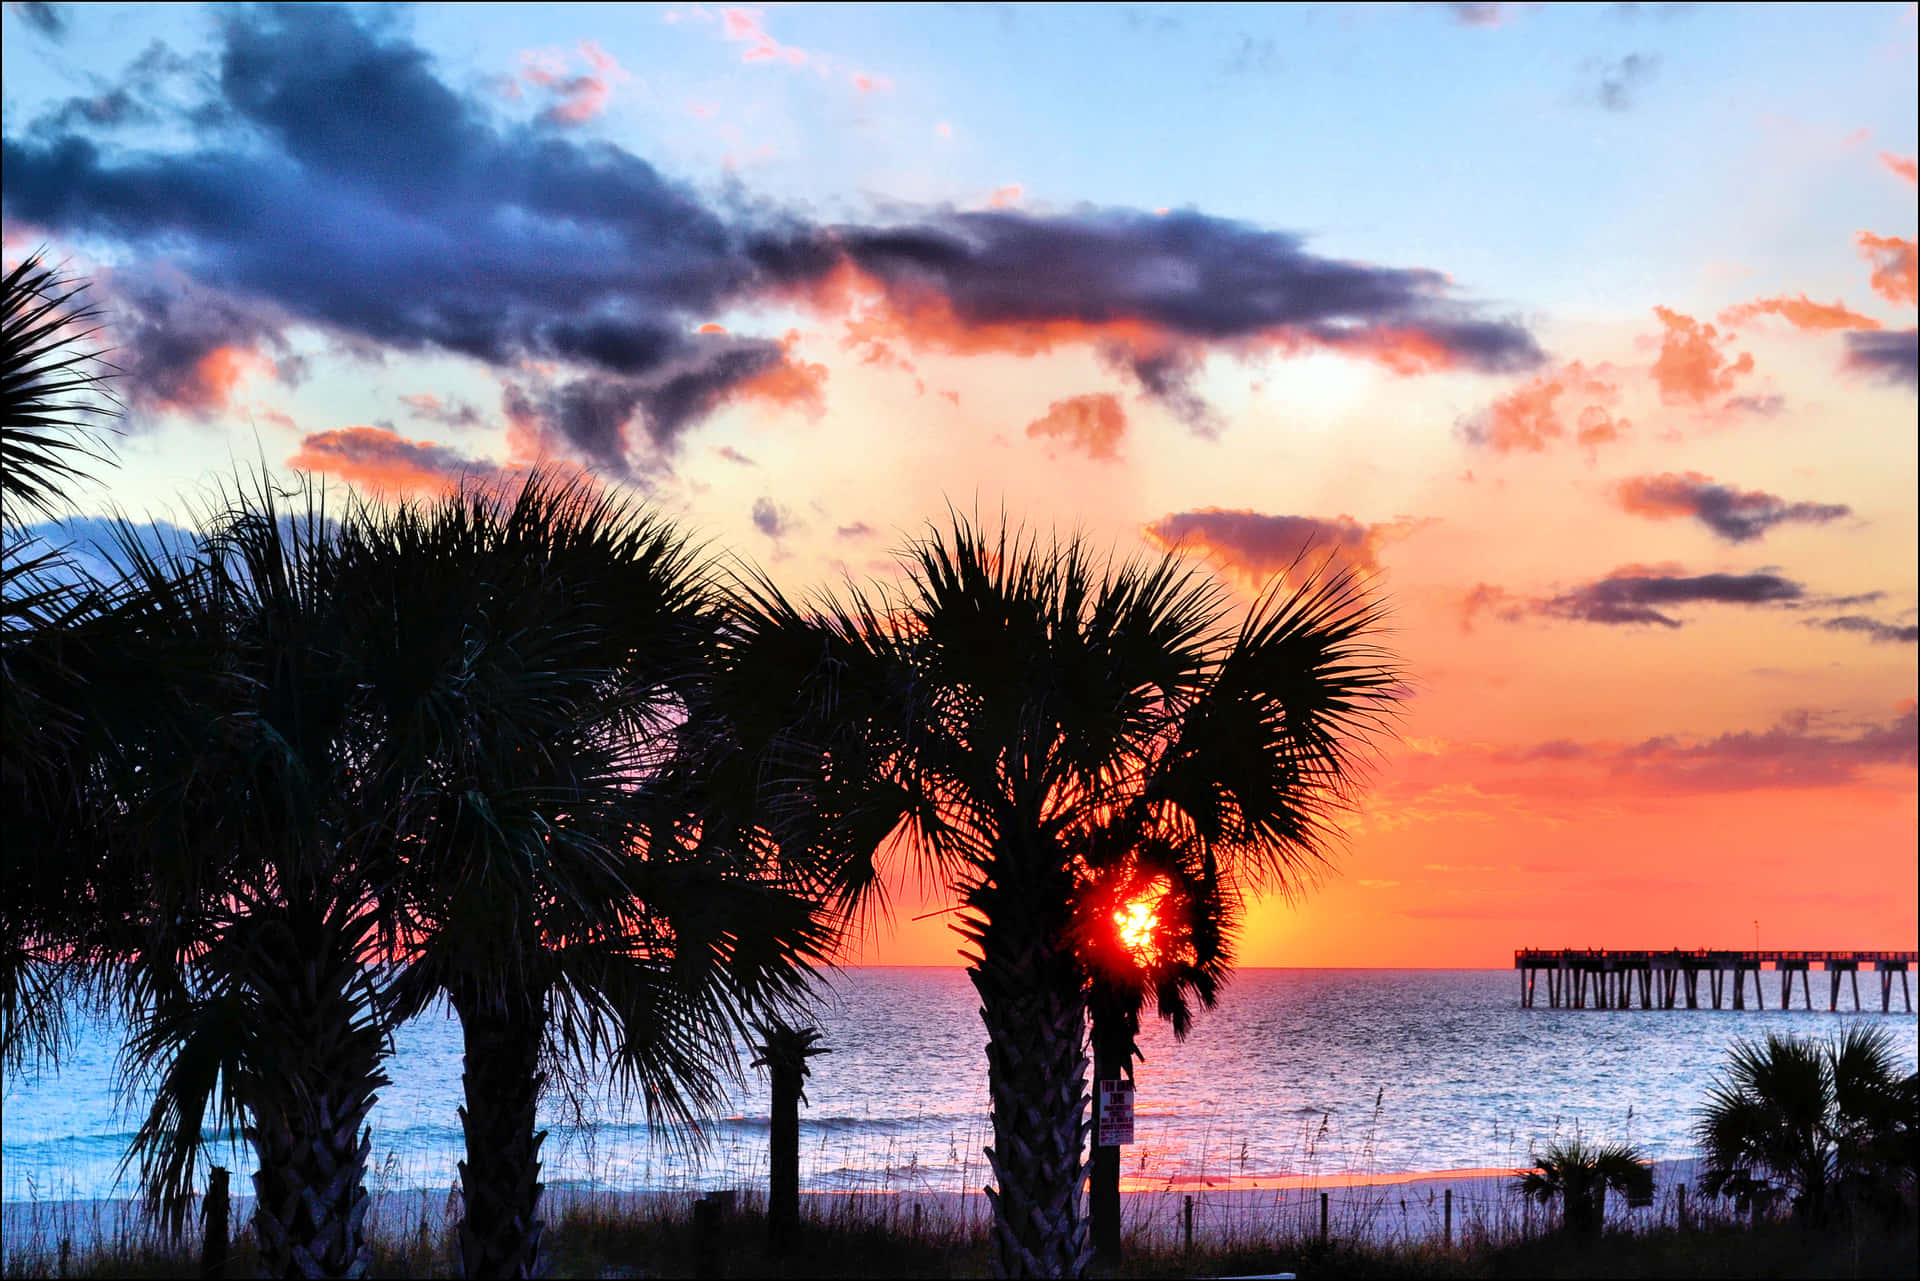 "Serene Silhouette: Enjoying the beauty of a beach sunset"